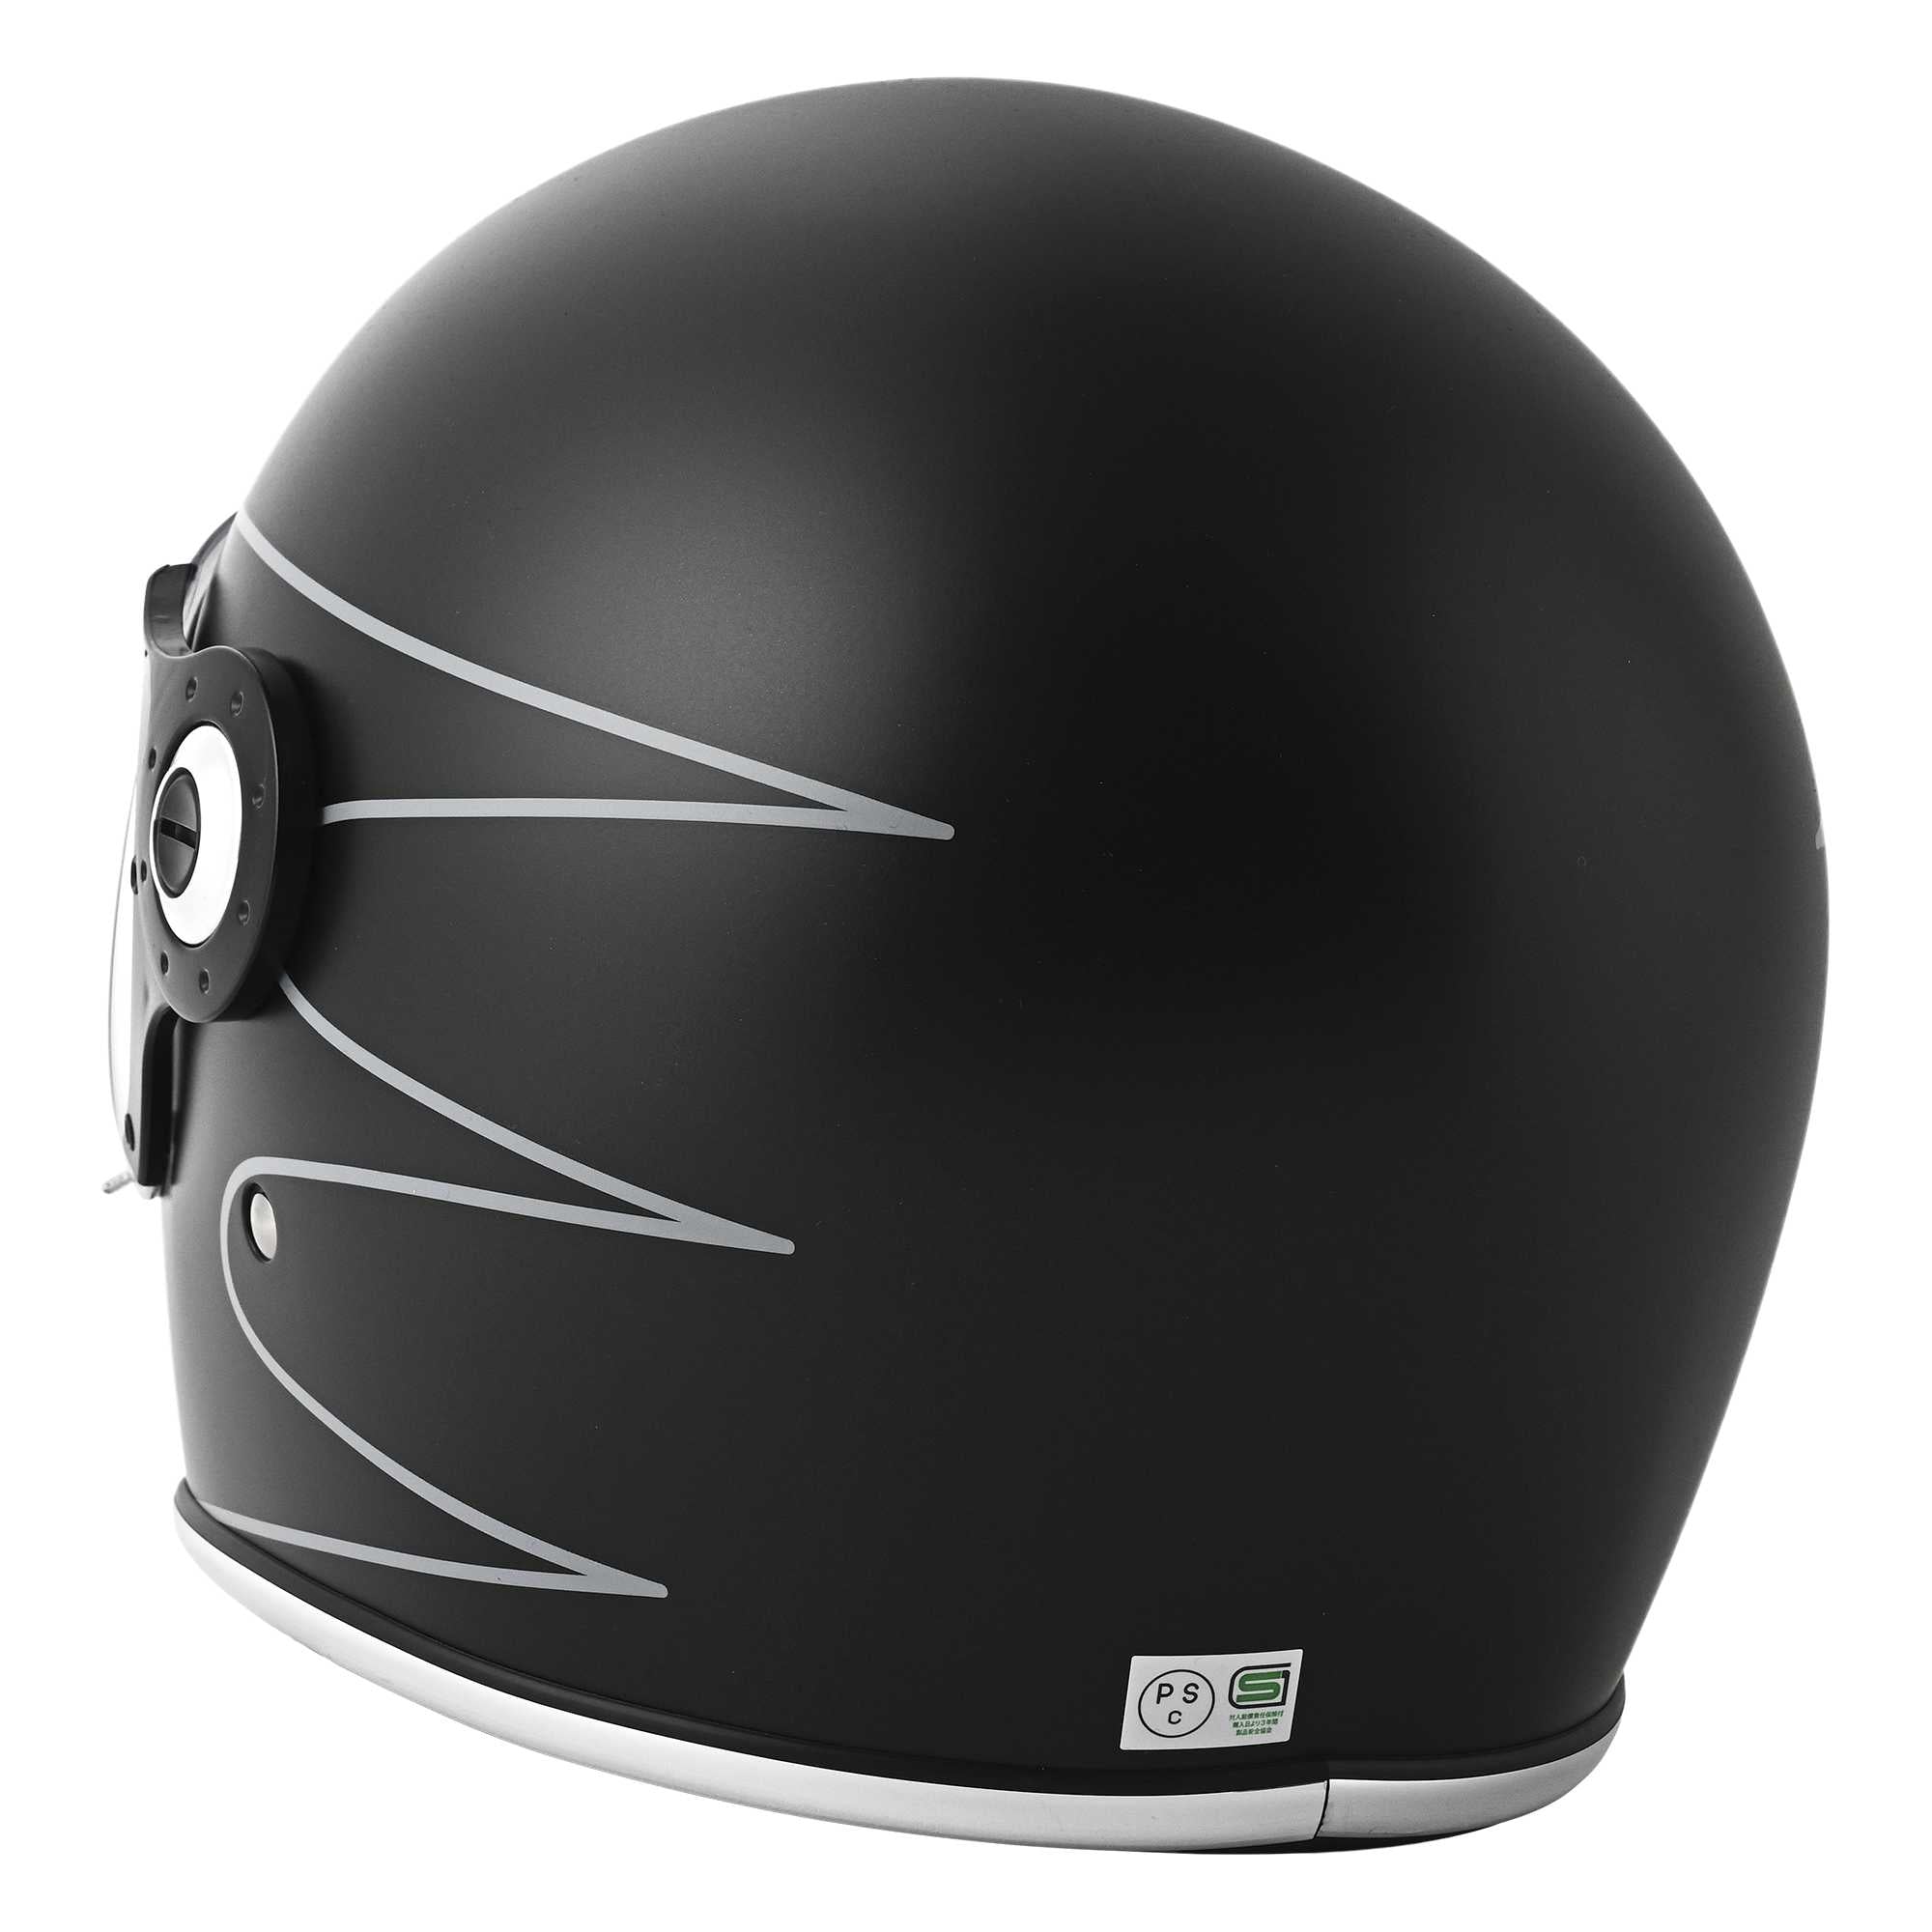 RIDEZ X HELMET Limited Quantity Model SCALLOP Full Face Motorcycle Helmet 